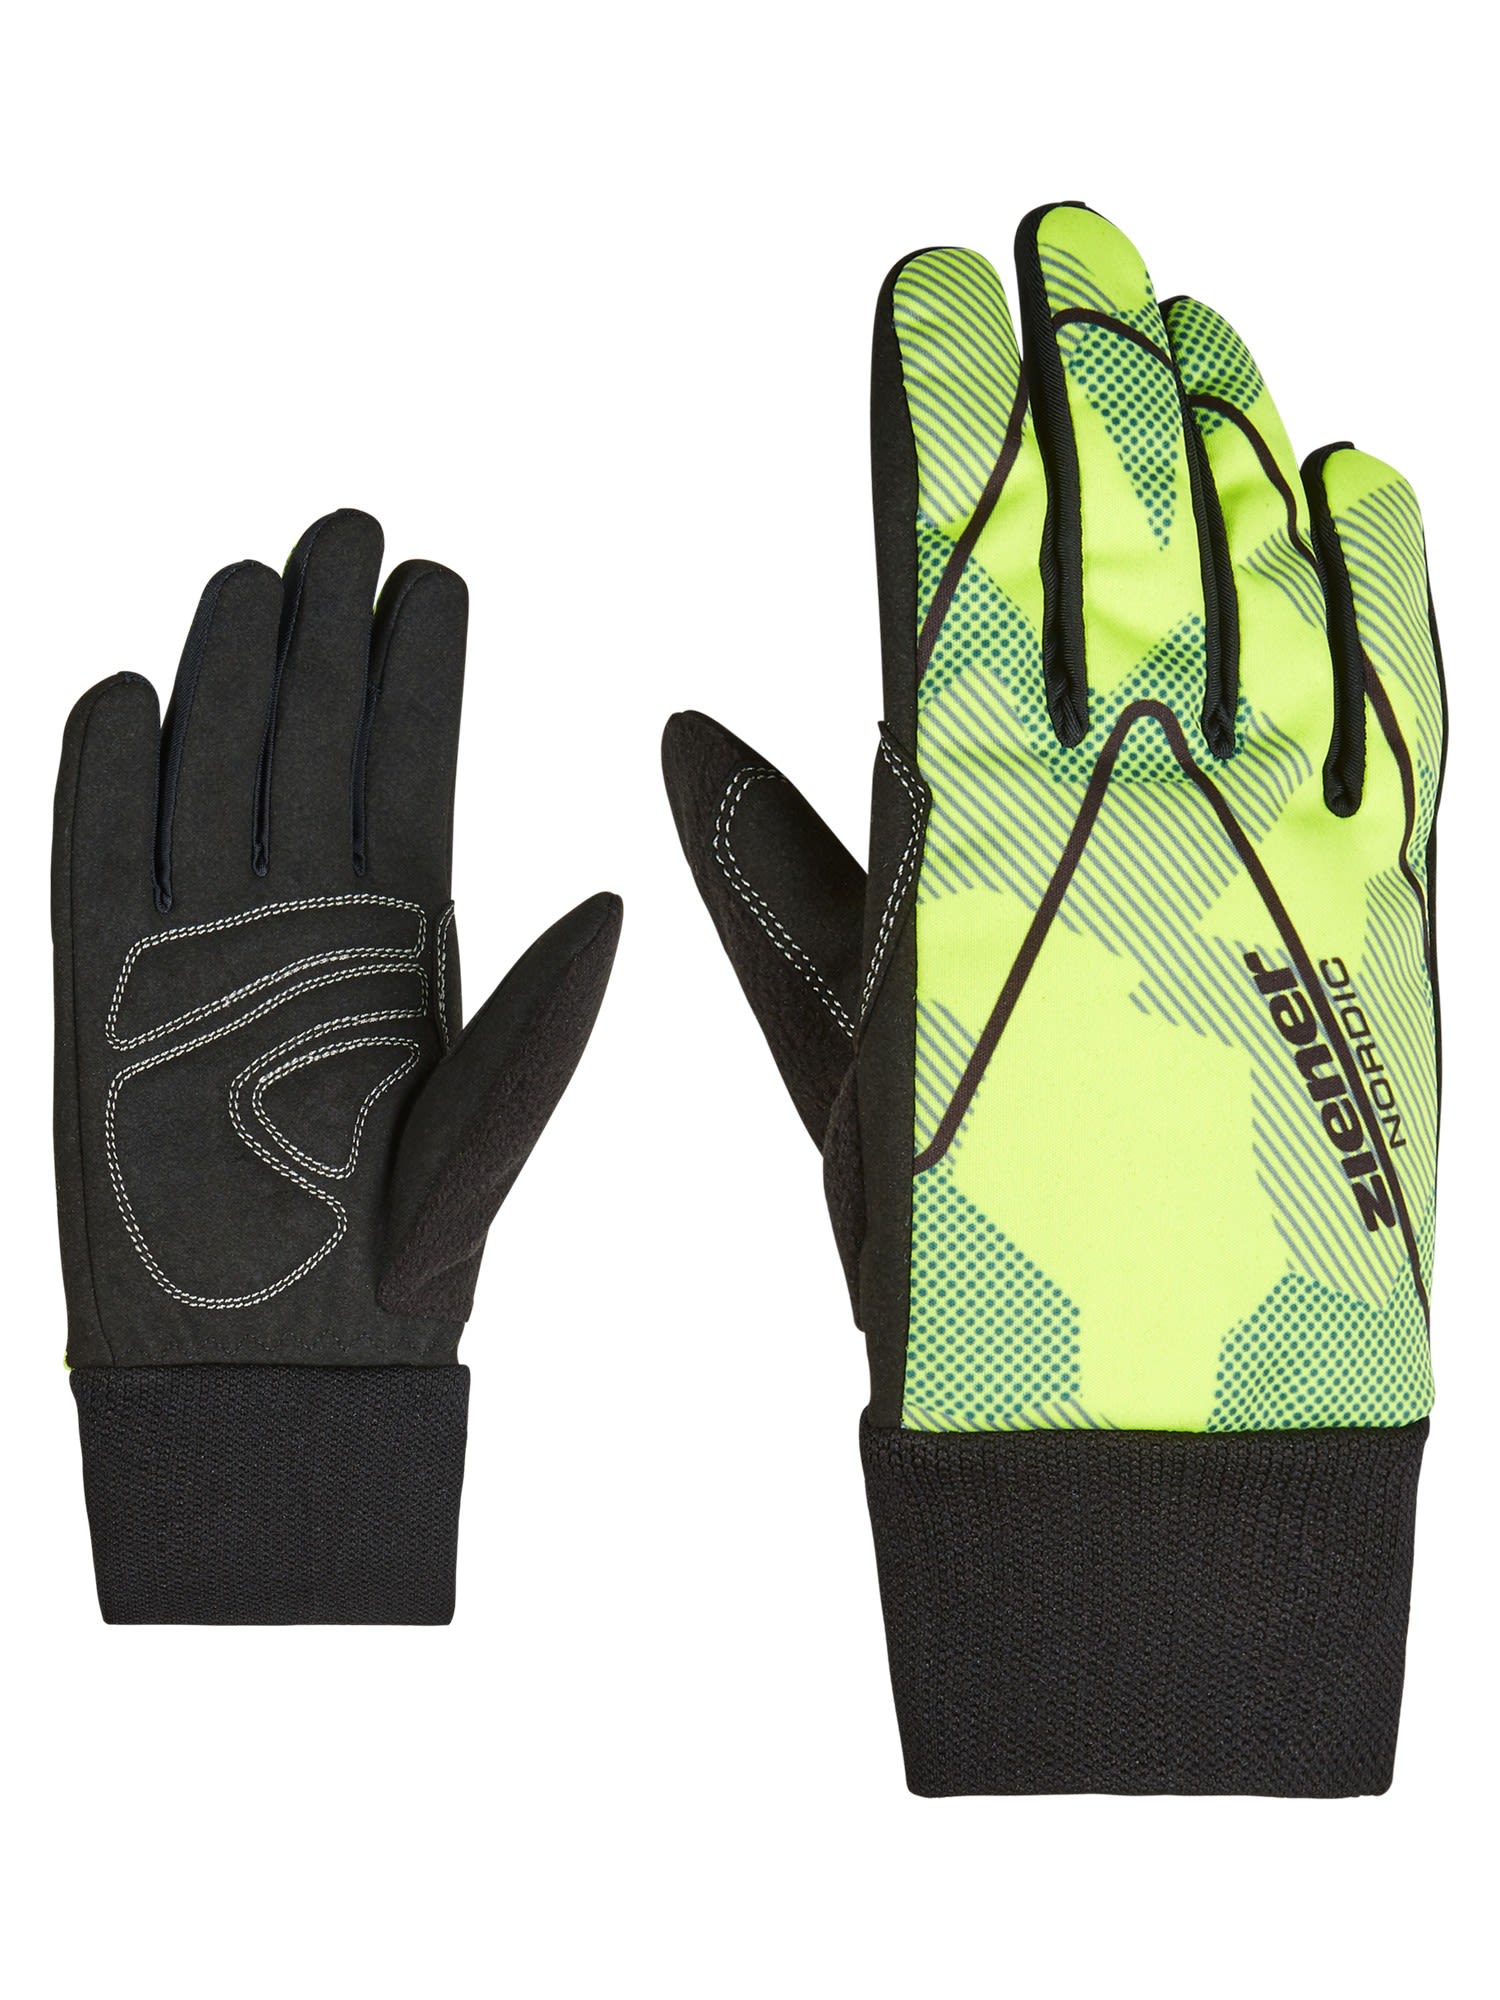 Glove Junior | Ziener eBay Unico